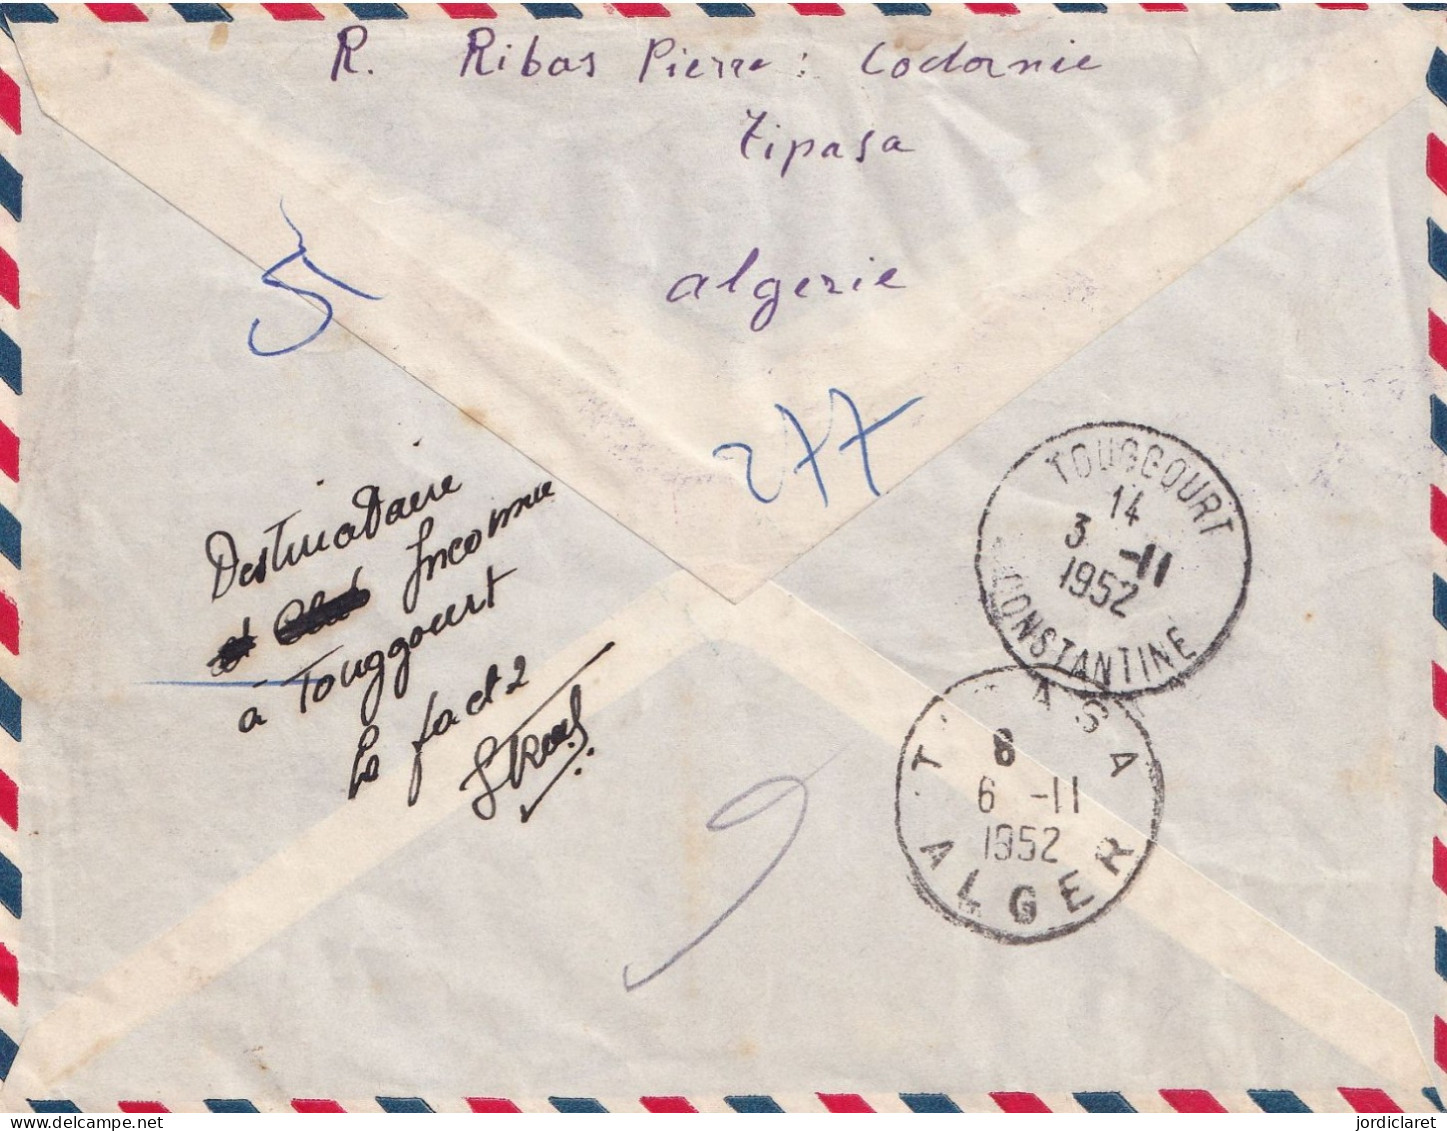 FIRST FLIGHT 1952  RECOMANDEE TIPASA  ALGER-BISKRA-TOOGOURT - Covers & Documents